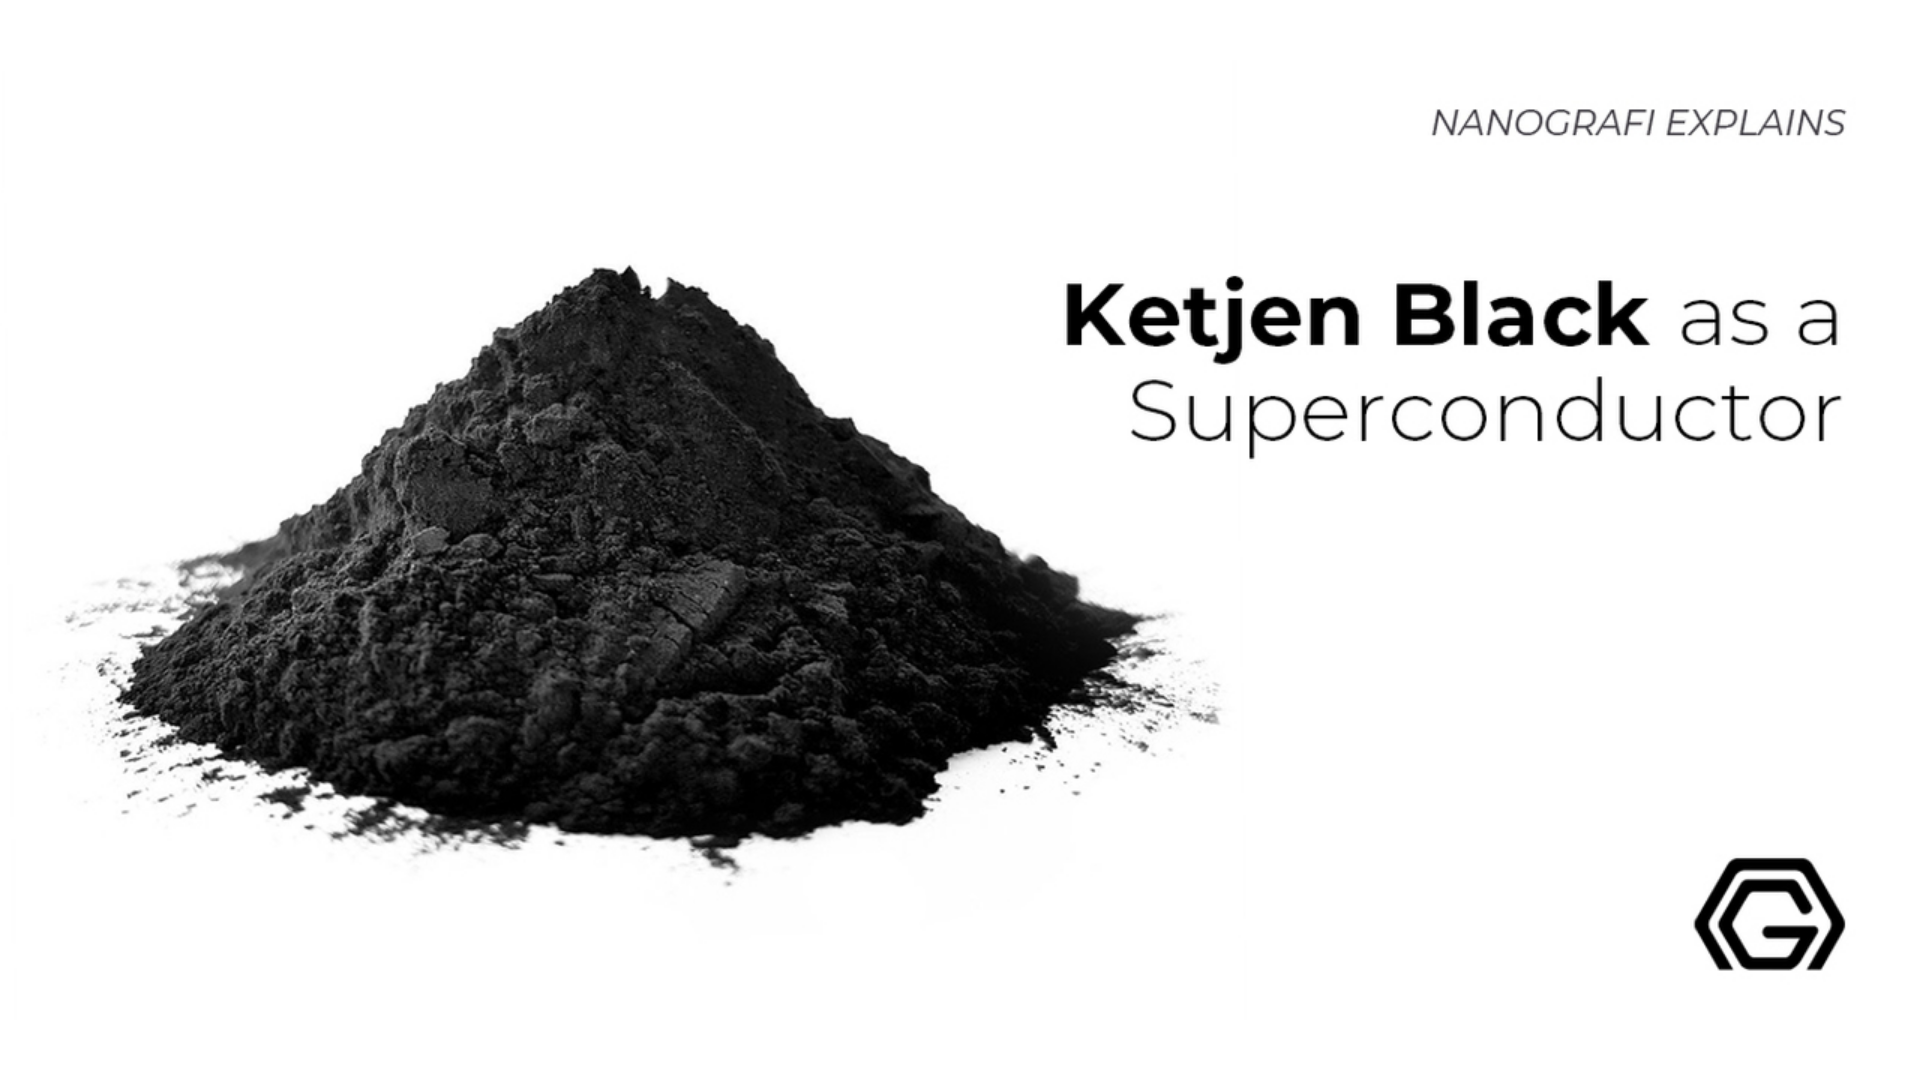 Ketjen black as a superconductor